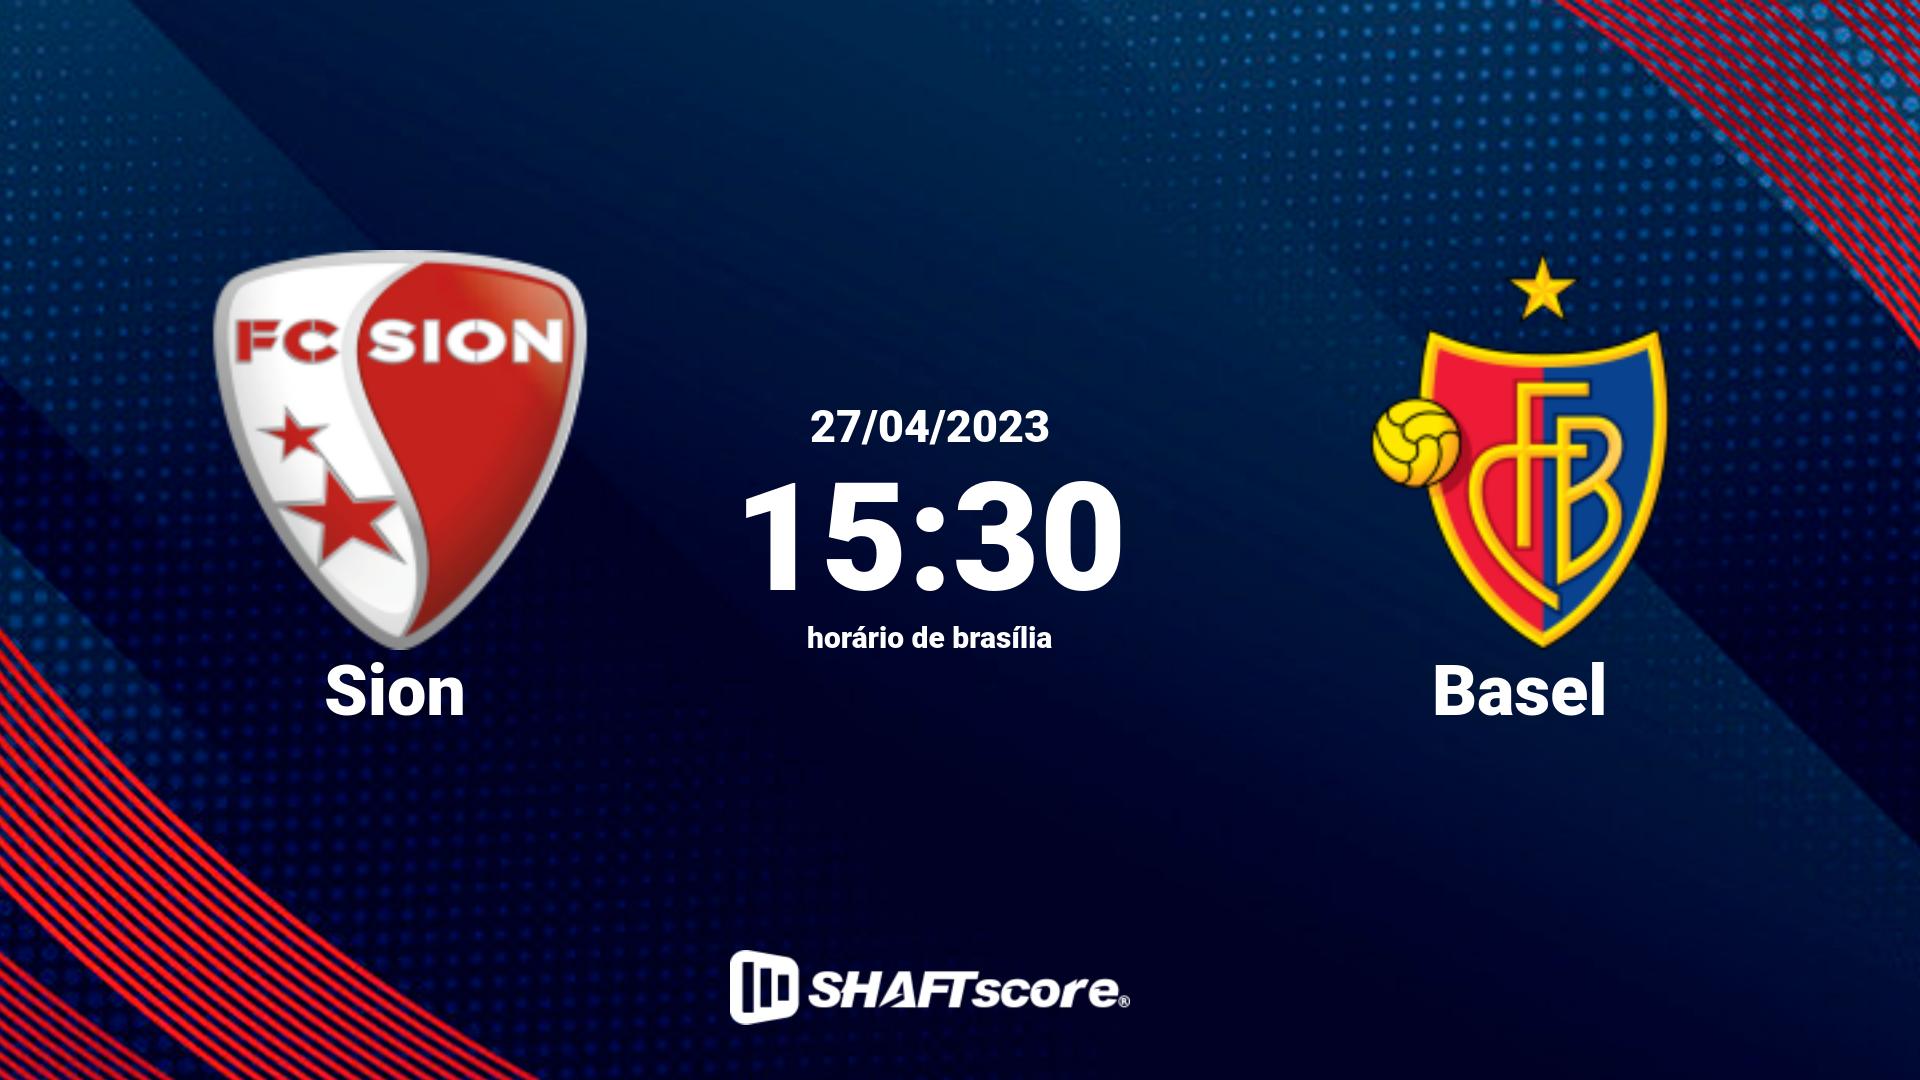 Estatísticas do jogo Sion vs Basel 27.04 15:30